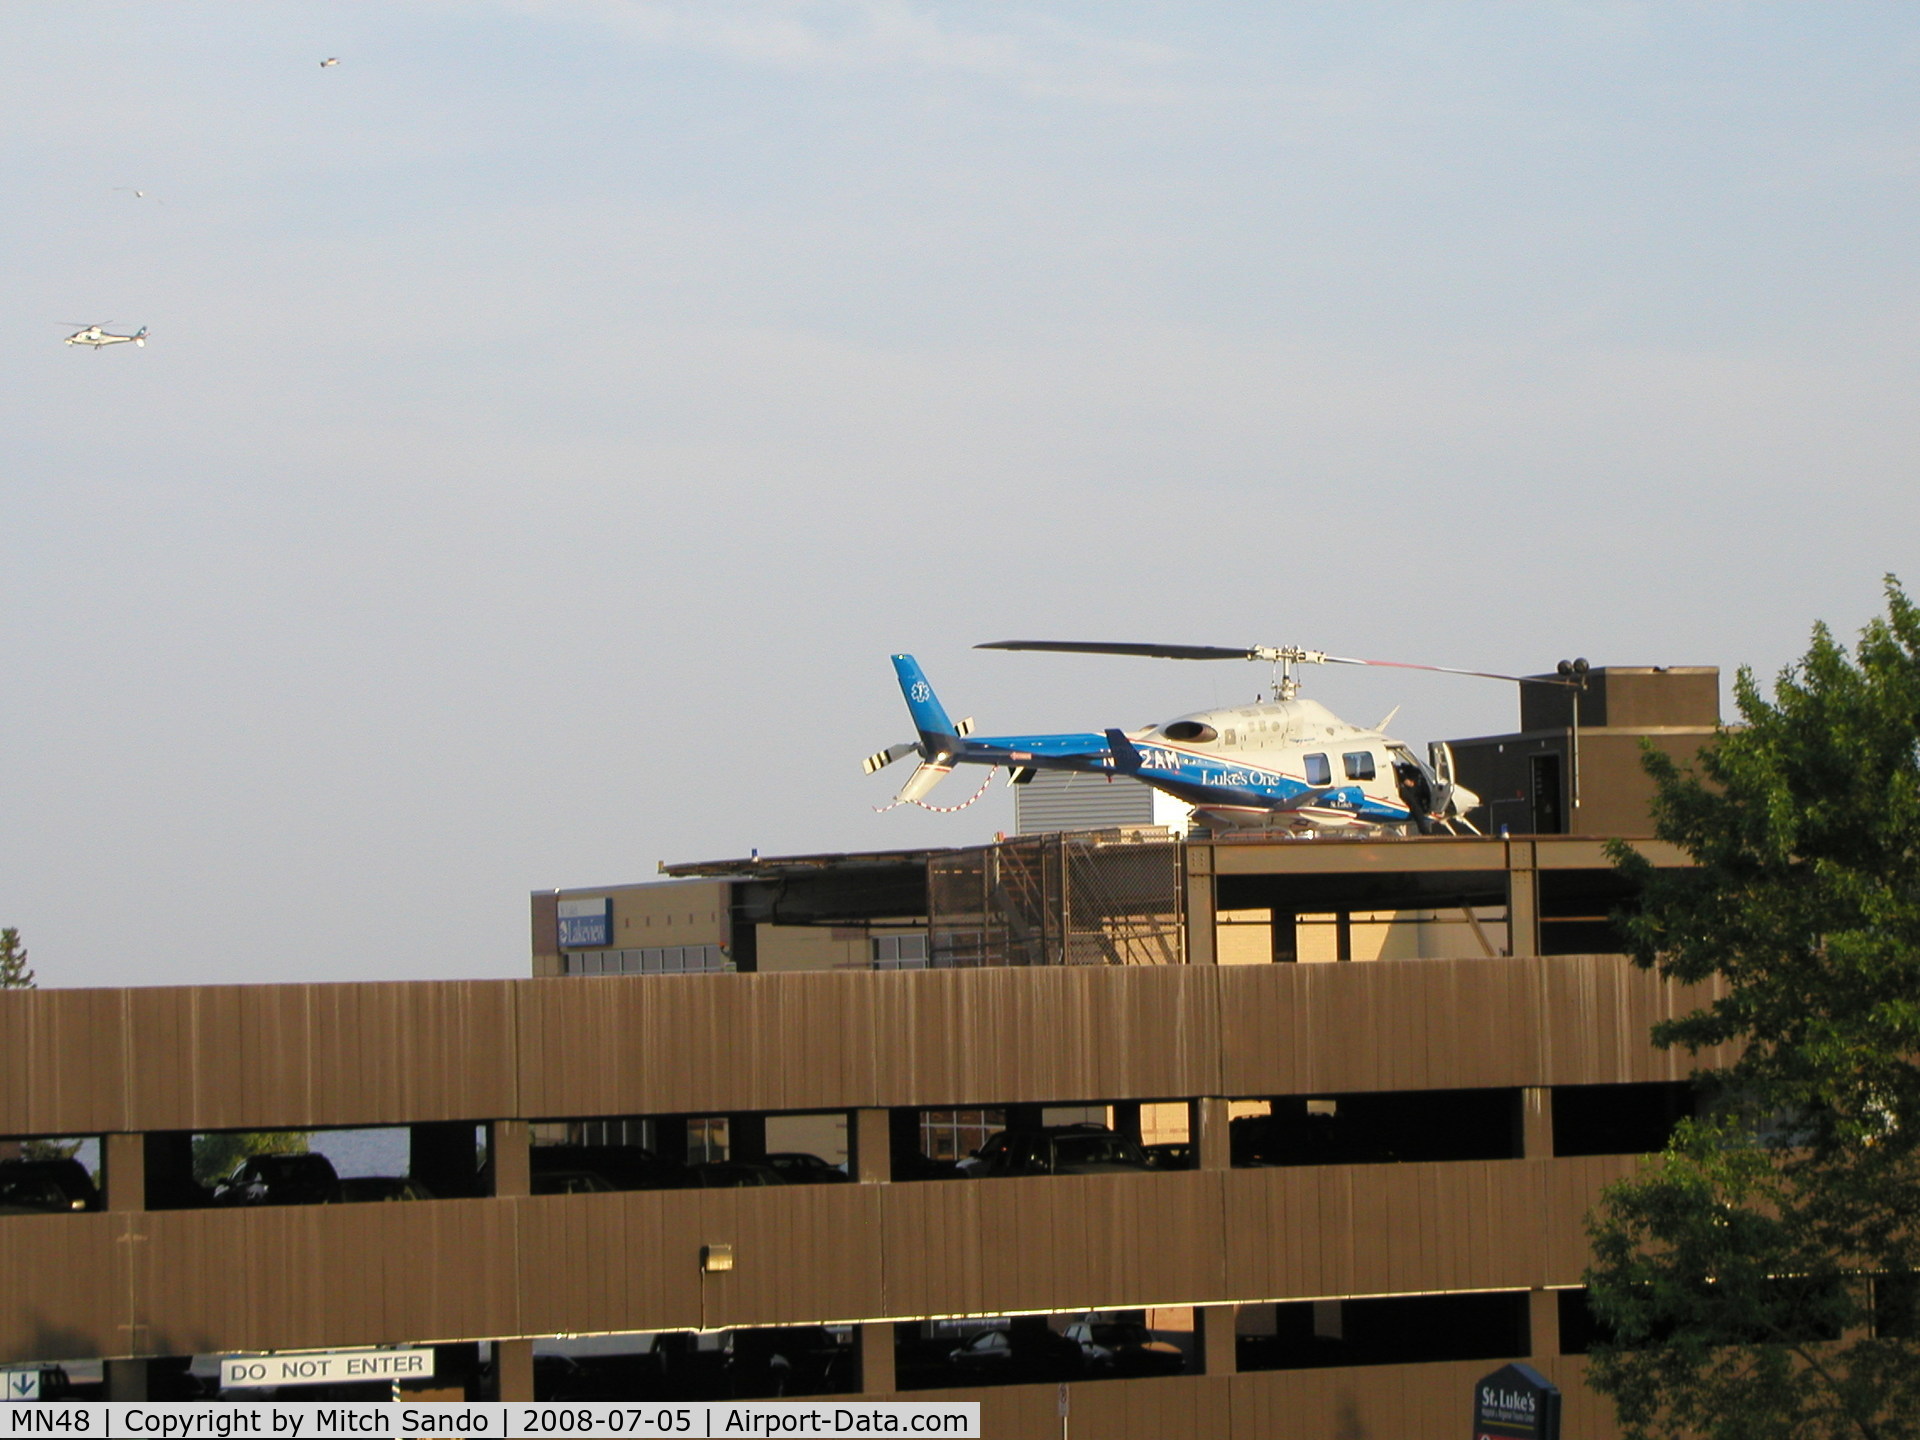 St Luke Hospital Heliport (MN48) - St. Luke's Hospital in Downtown Duluth, a Level II Trauma Center.